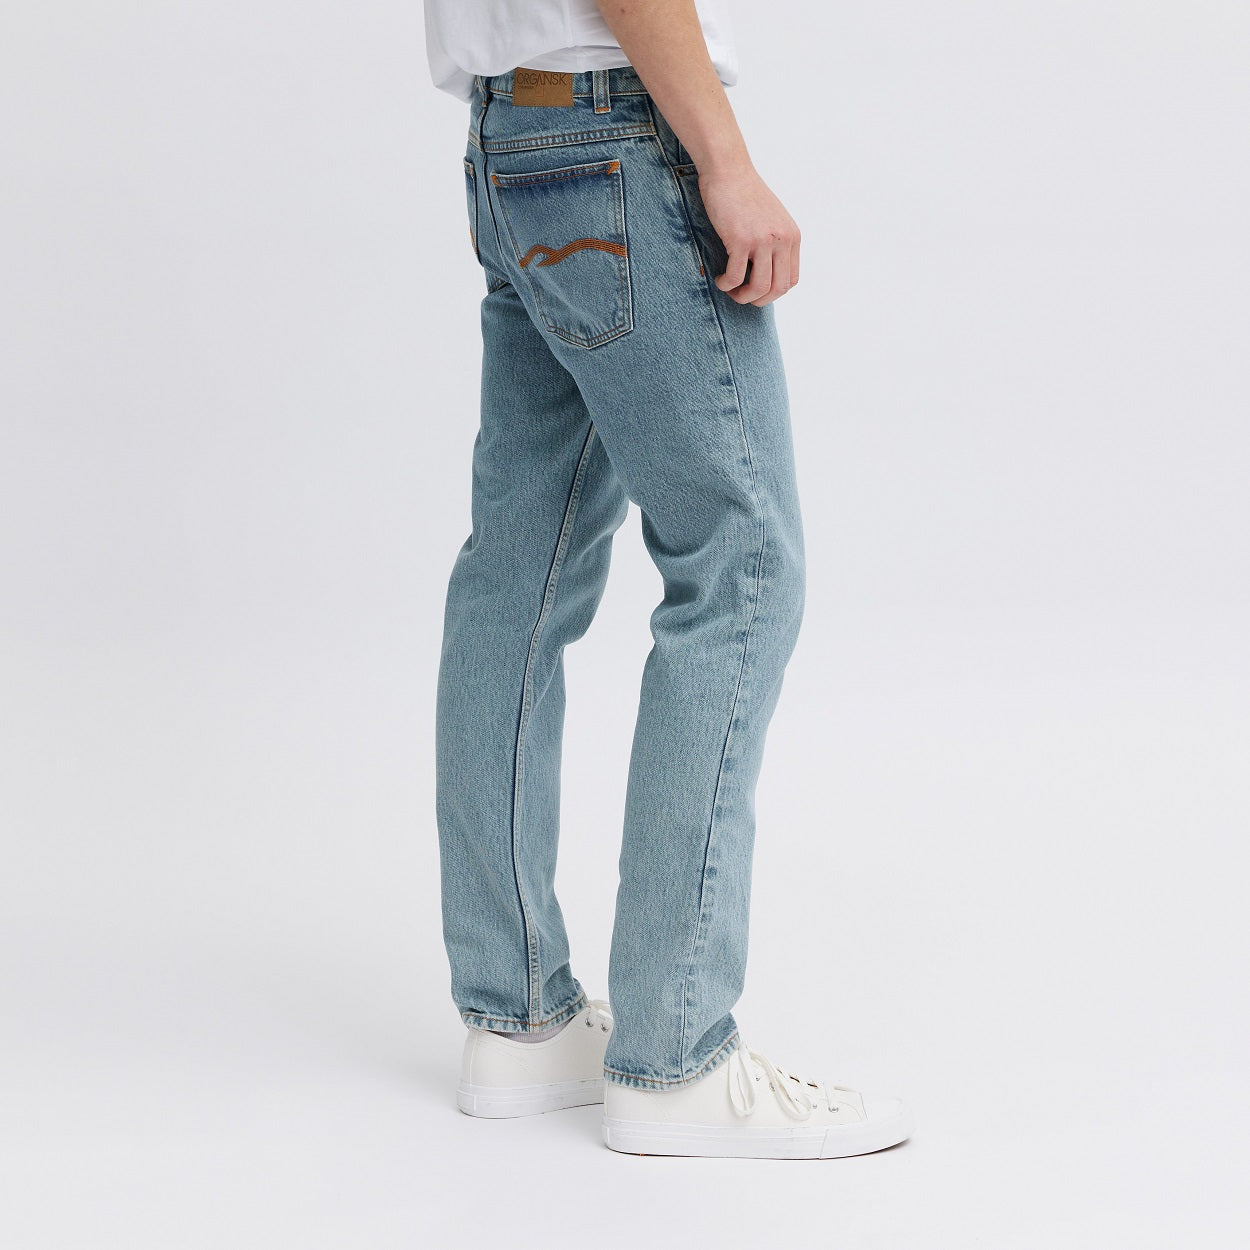 Classic men's jeans